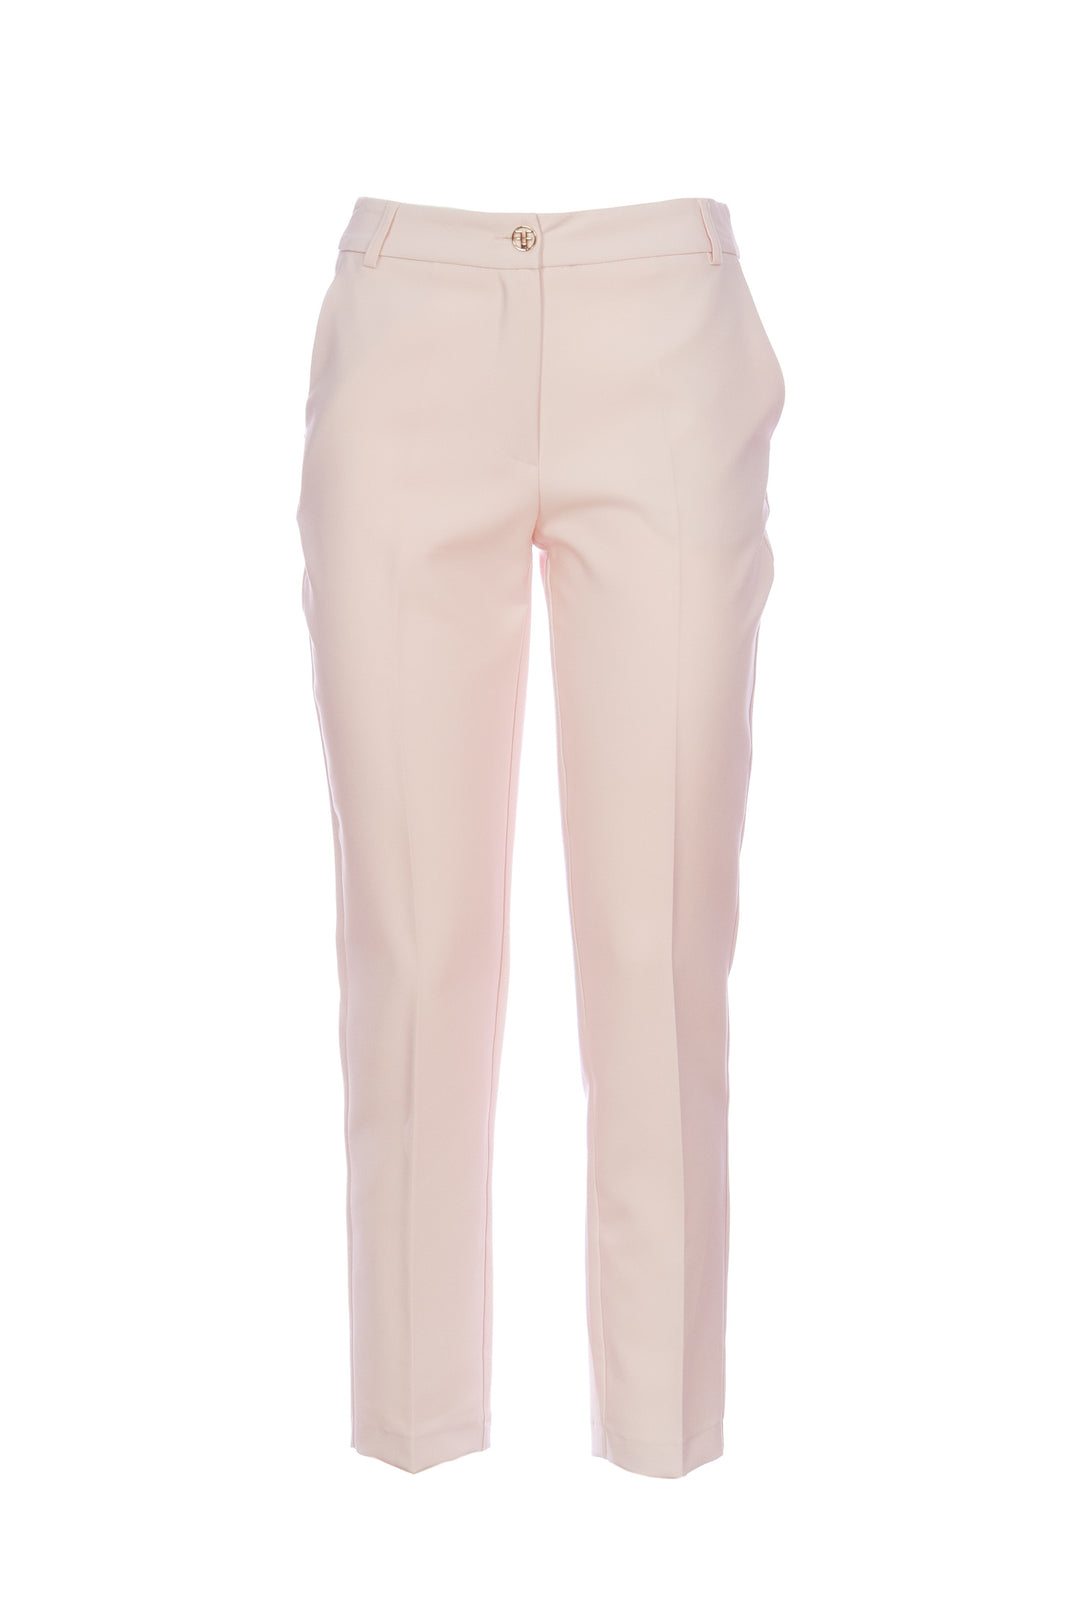 FRACOMINA Pantaloni chino regular rosa in tessuto tecnico - Mancinelli 1954